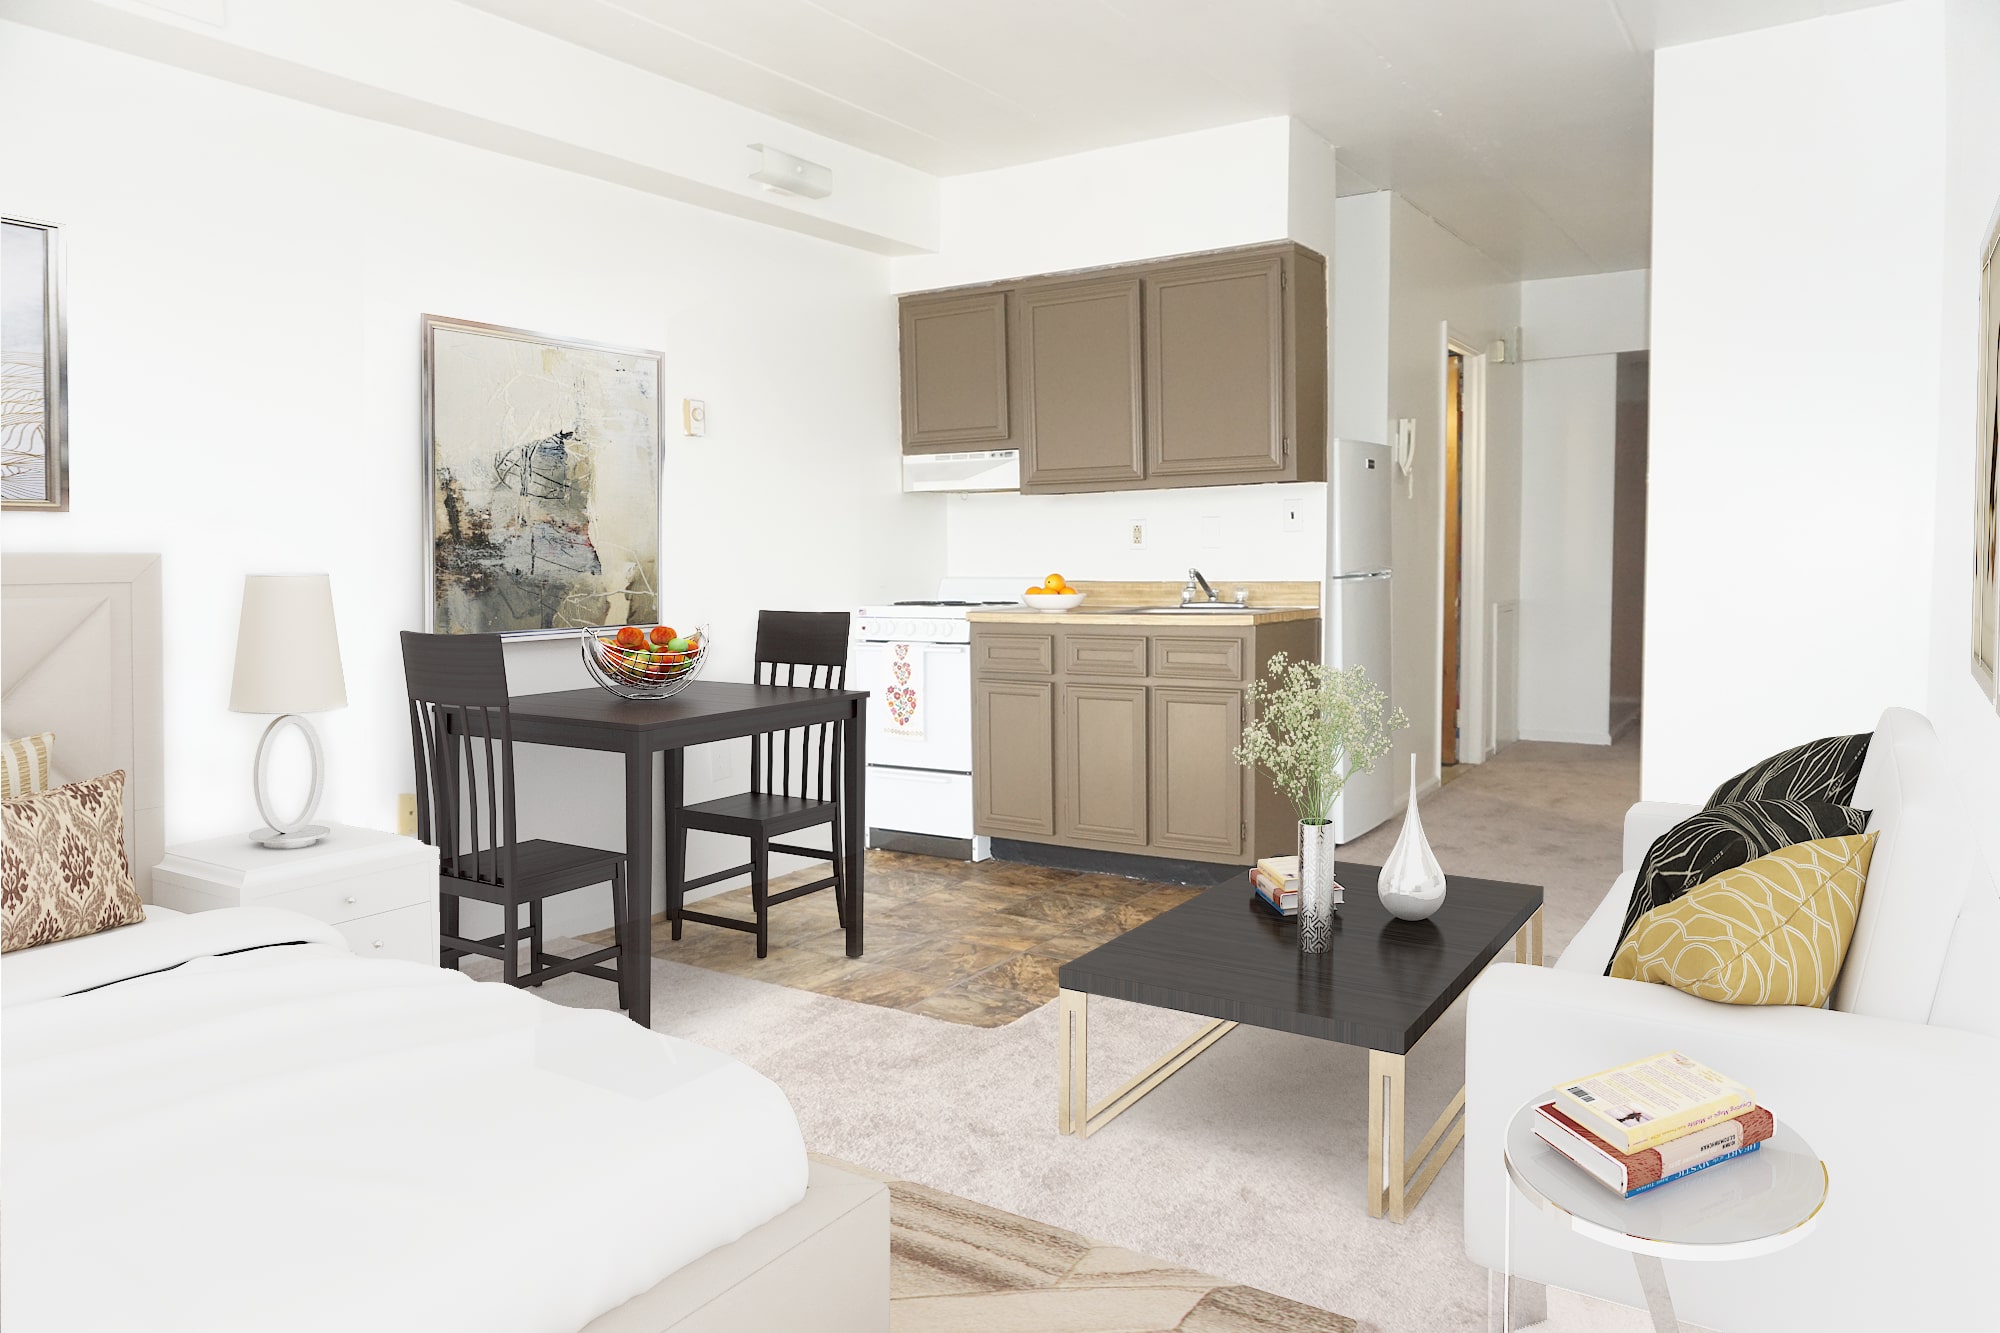 1-bedroom living room and kitchen at Bridgeport Suites residential community in Bridgeport, PA